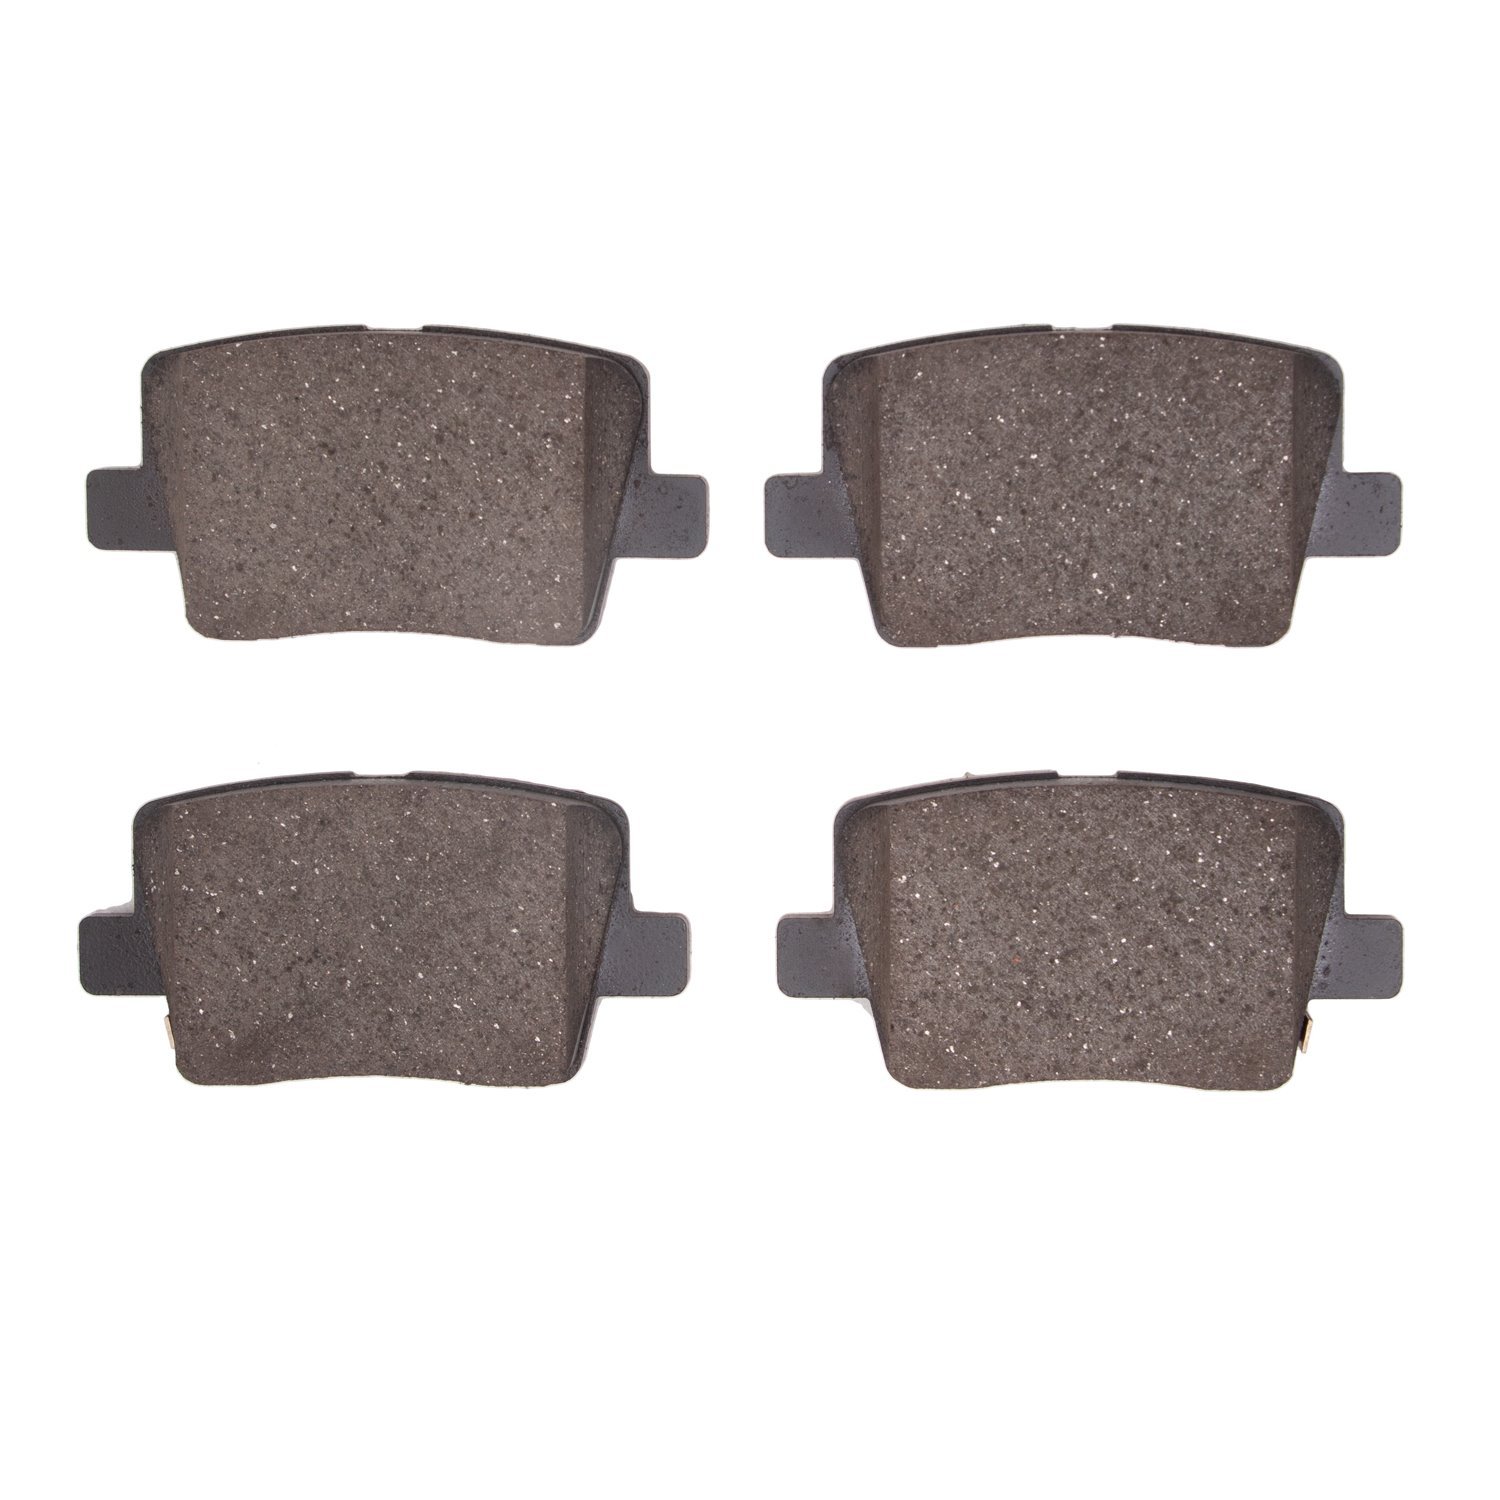 1310-2203-00 3000-Series Ceramic Brake Pads, Fits Select Kia/Hyundai/Genesis, Position: Rear